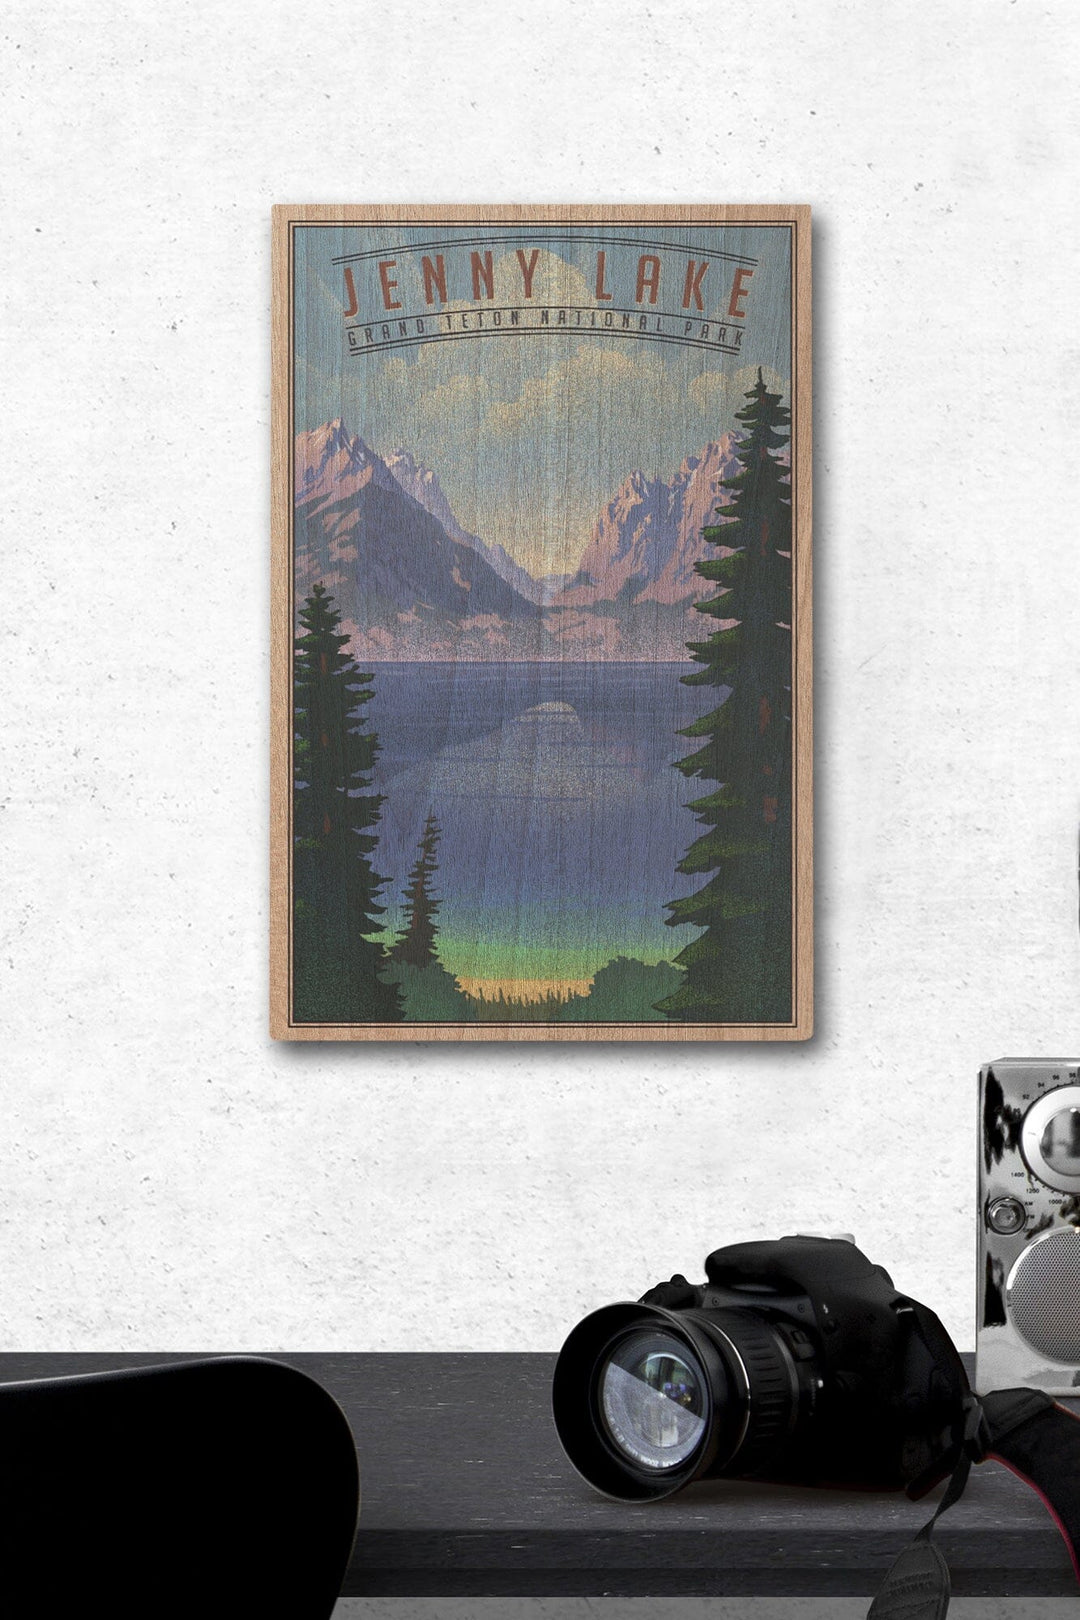 Grand Teton National Park, Wyoming, Jenny Lake, Lithograph National Park Series, Lantern Press Artwork, Wood Signs and Postcards Wood Lantern Press 12 x 18 Wood Gallery Print 